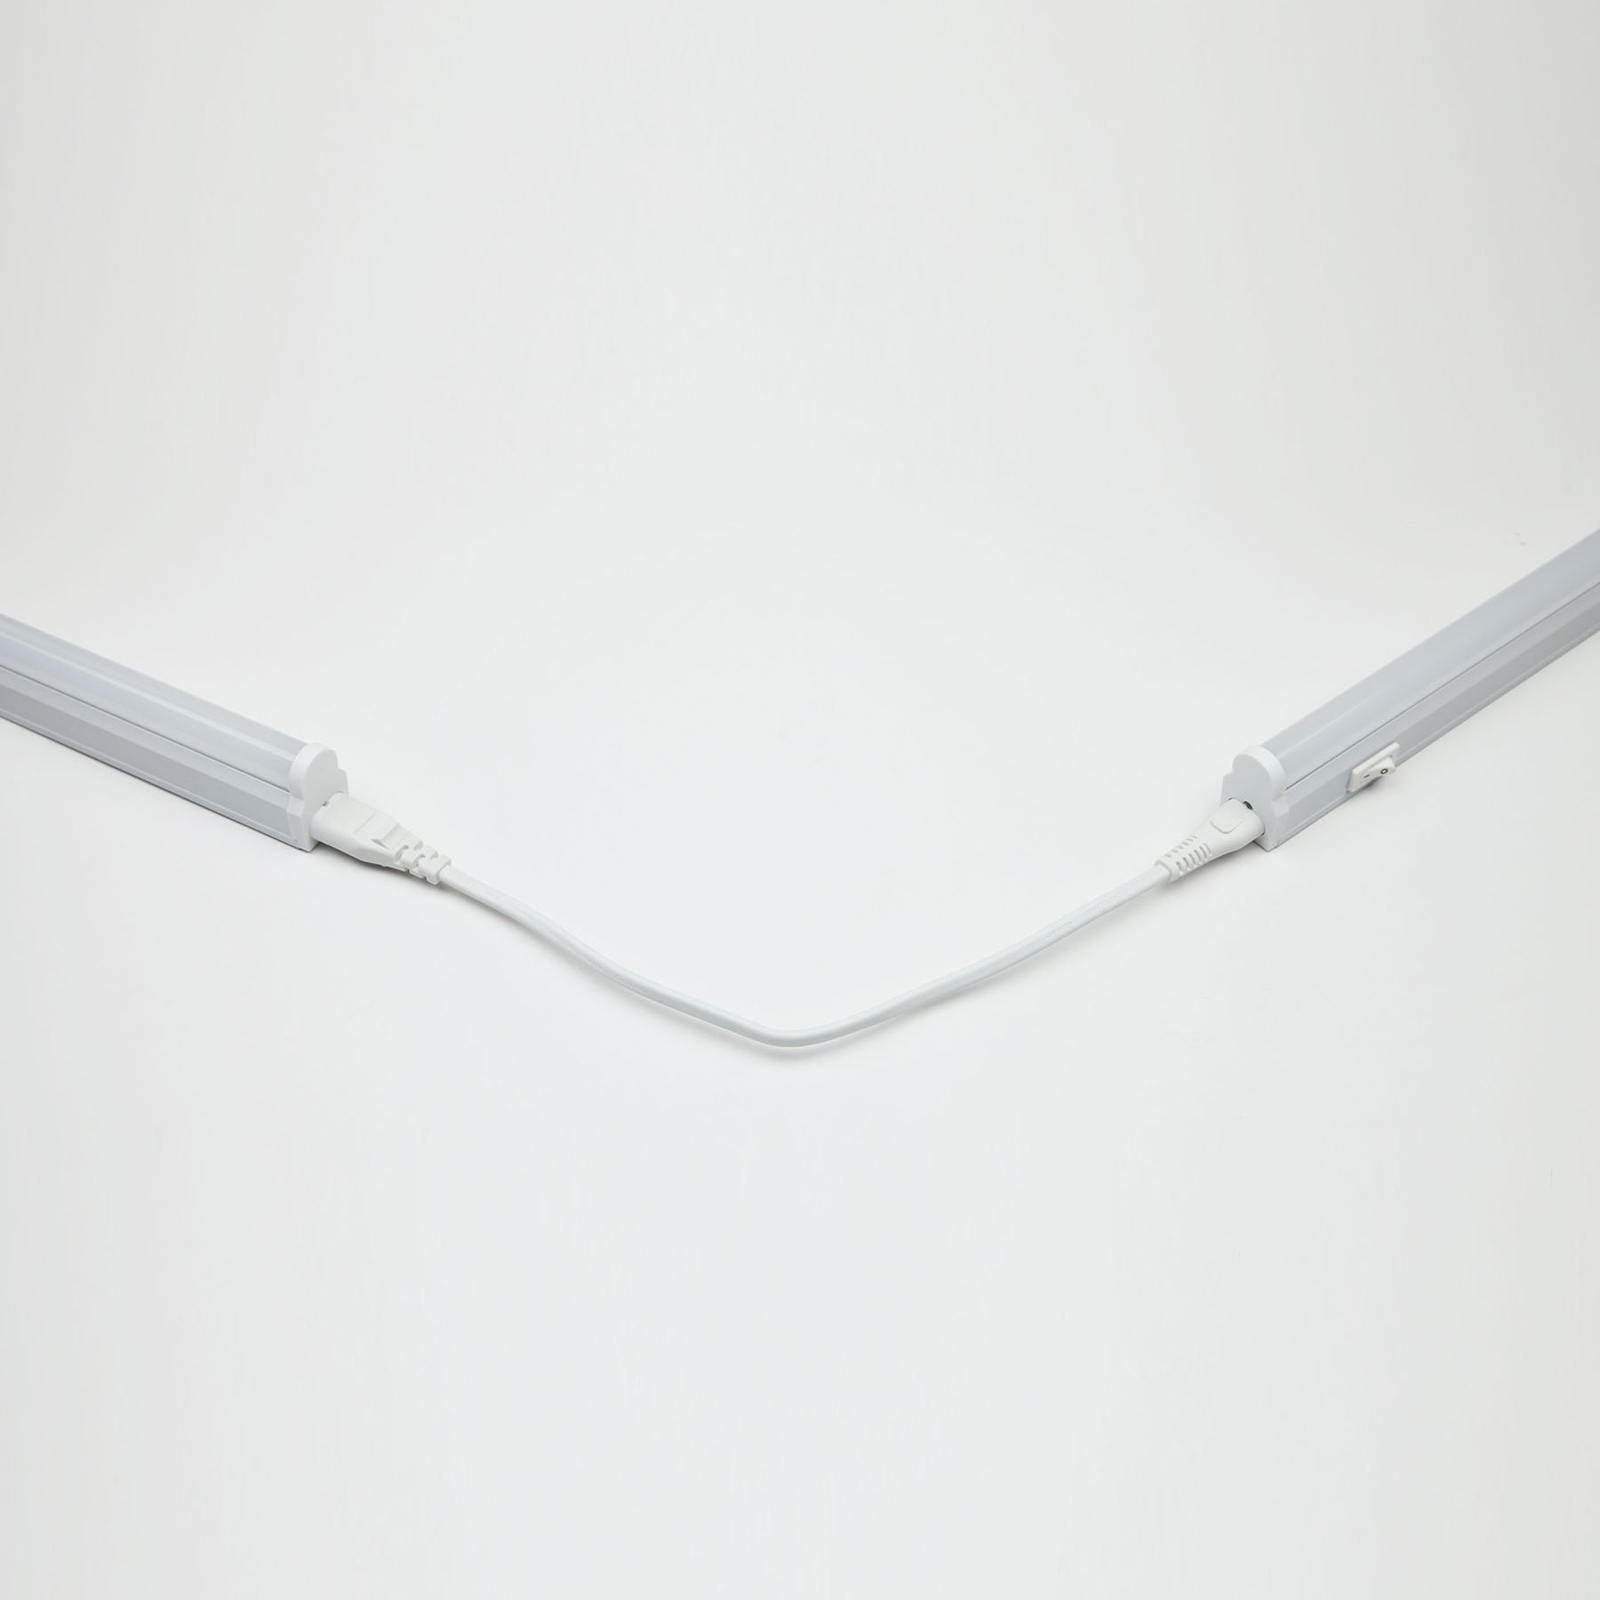 LED-lichtband 982, lengte 87,5 cm